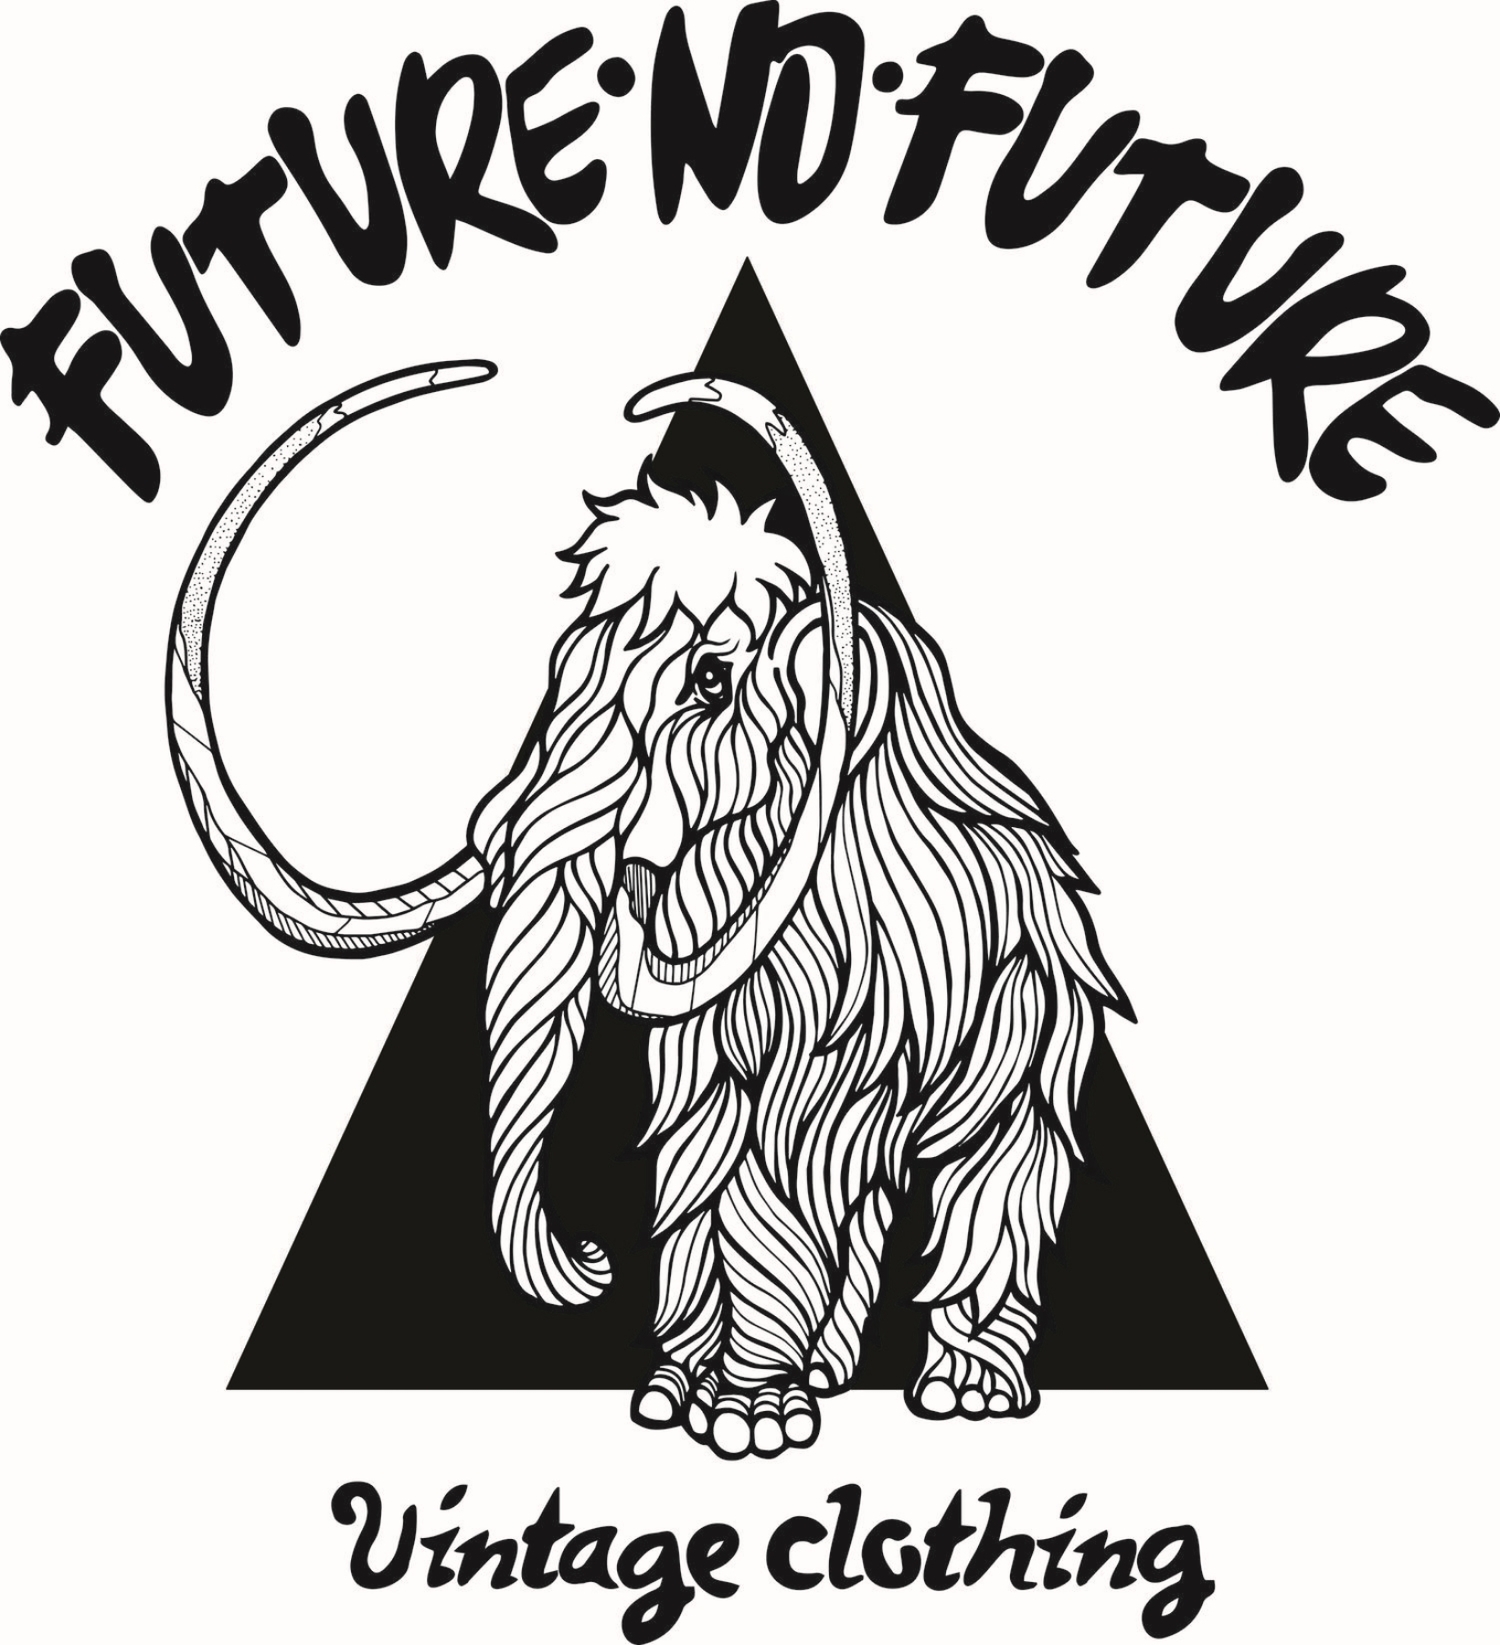 Future No Future vintage clothing